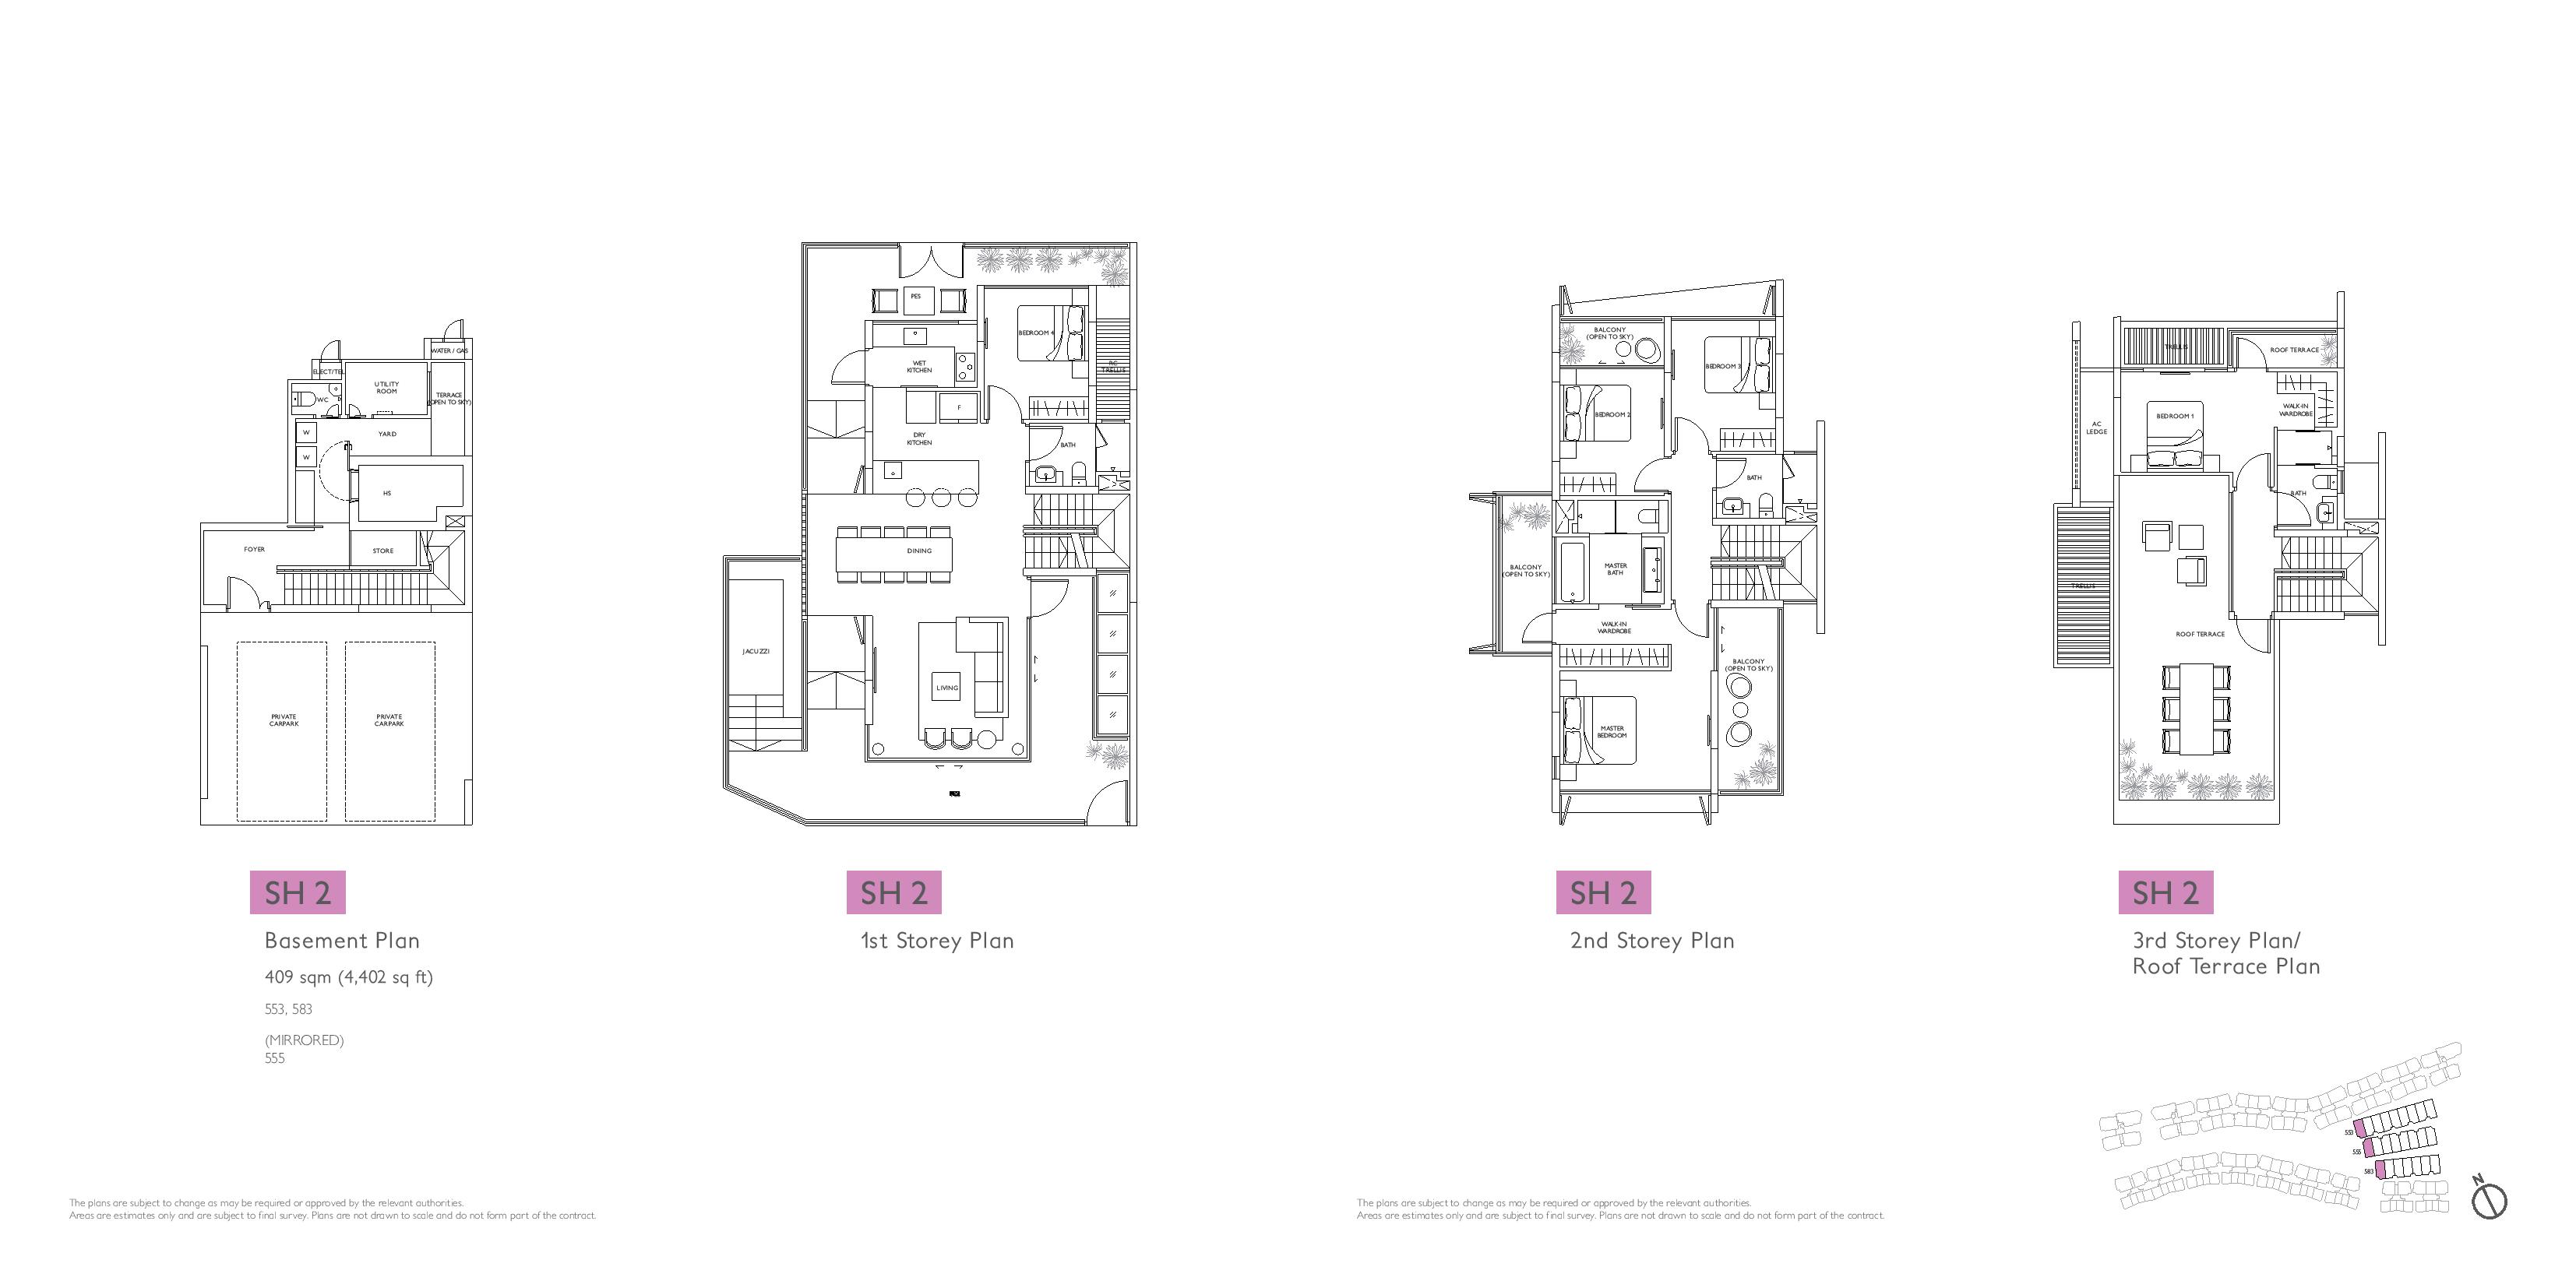 Archipelago 5 Bedroom Strata-Landed House Type SH2 Floor Plans